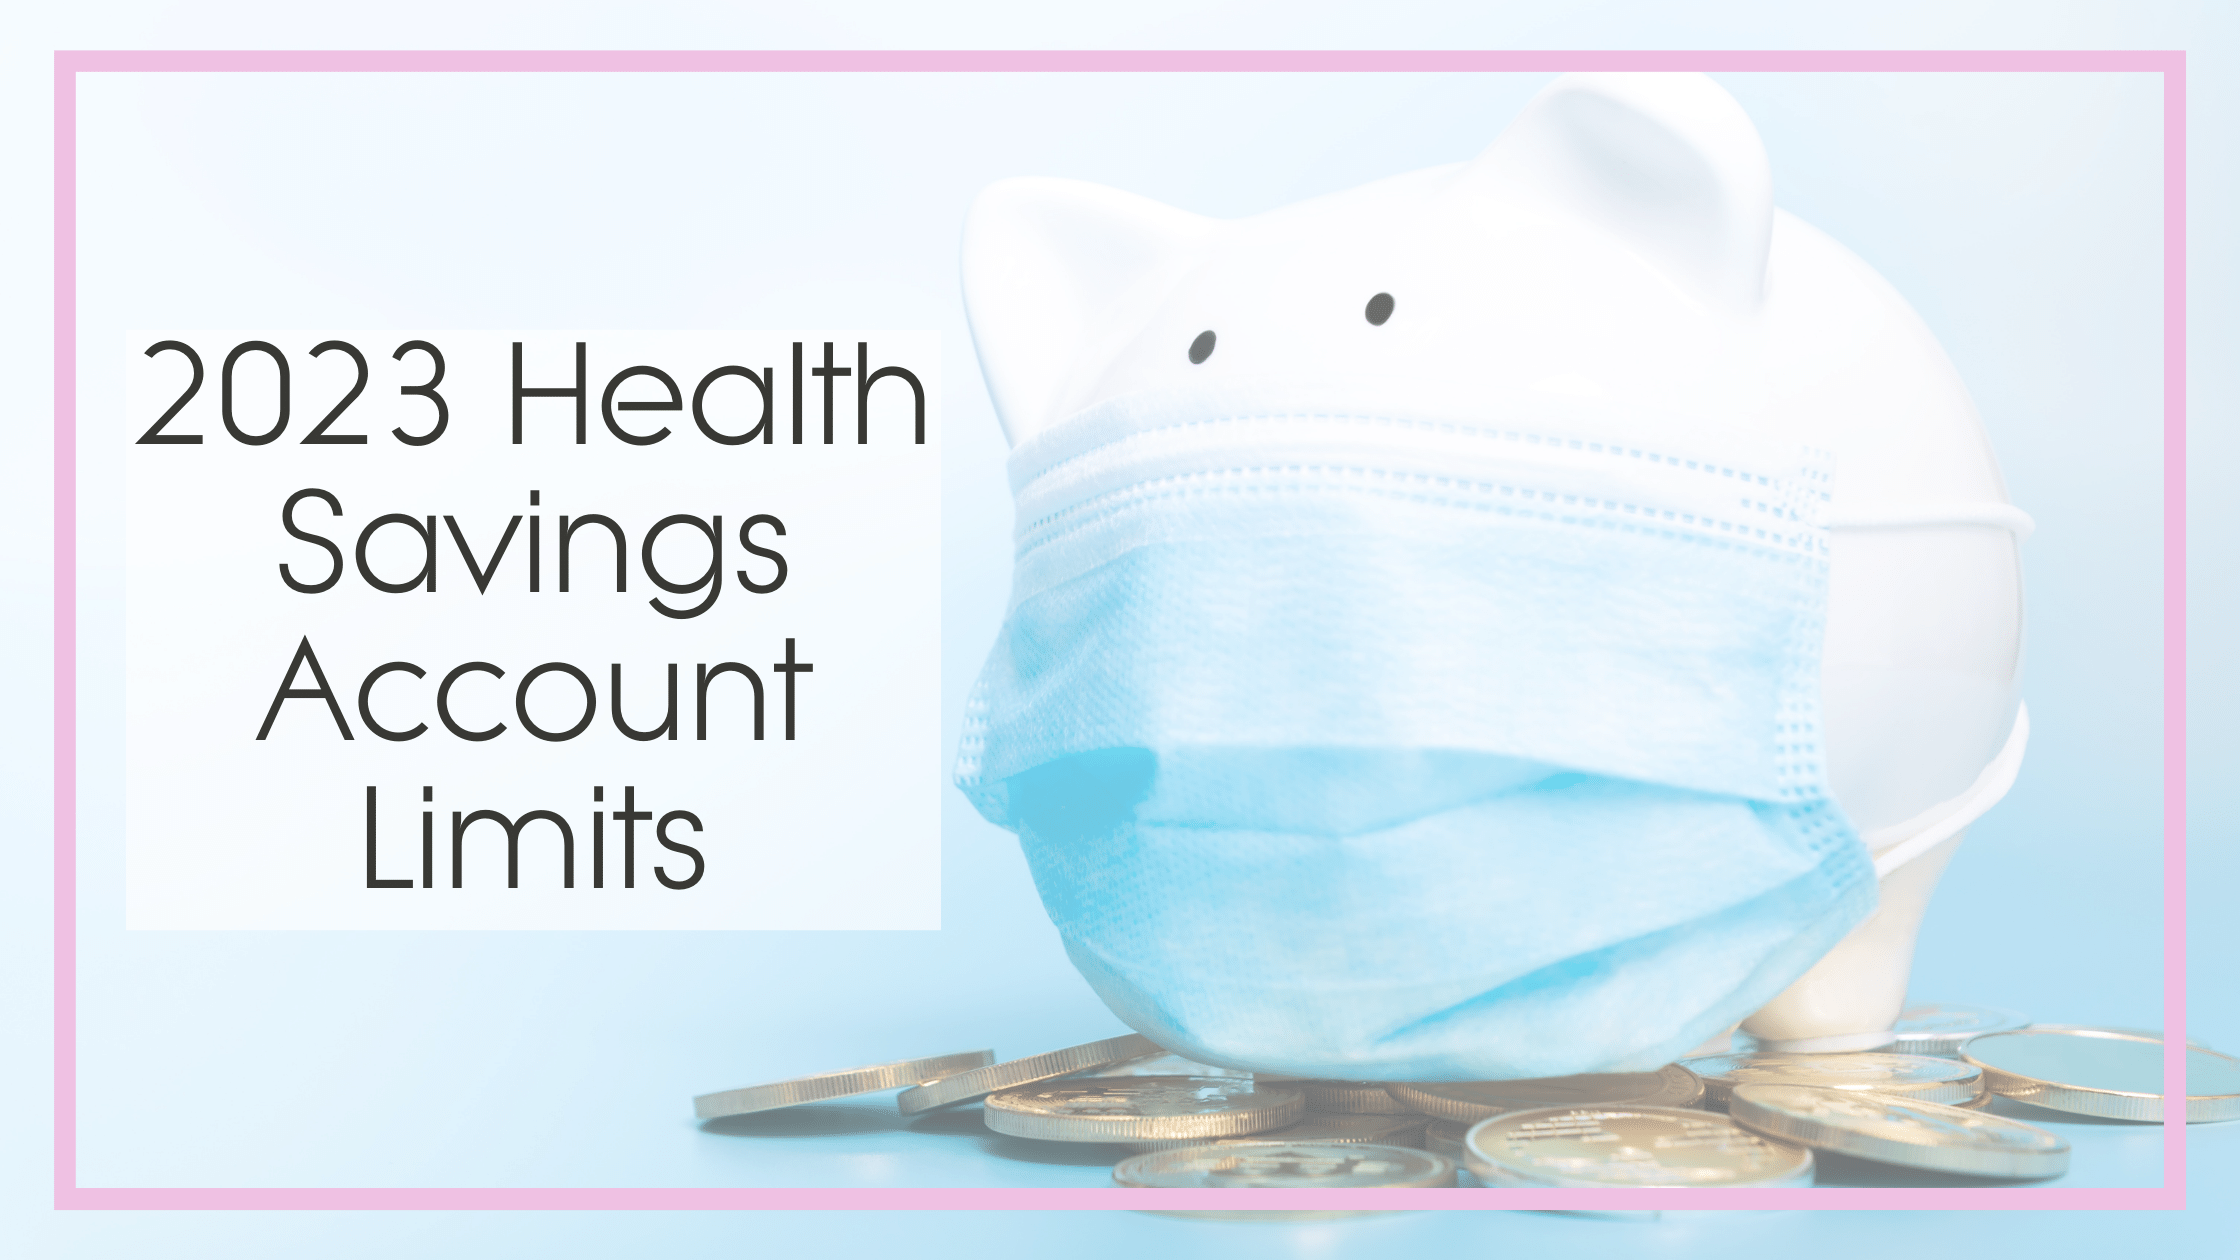 Blog “2023 Health Savings Account Limits” Gold Standard Tax